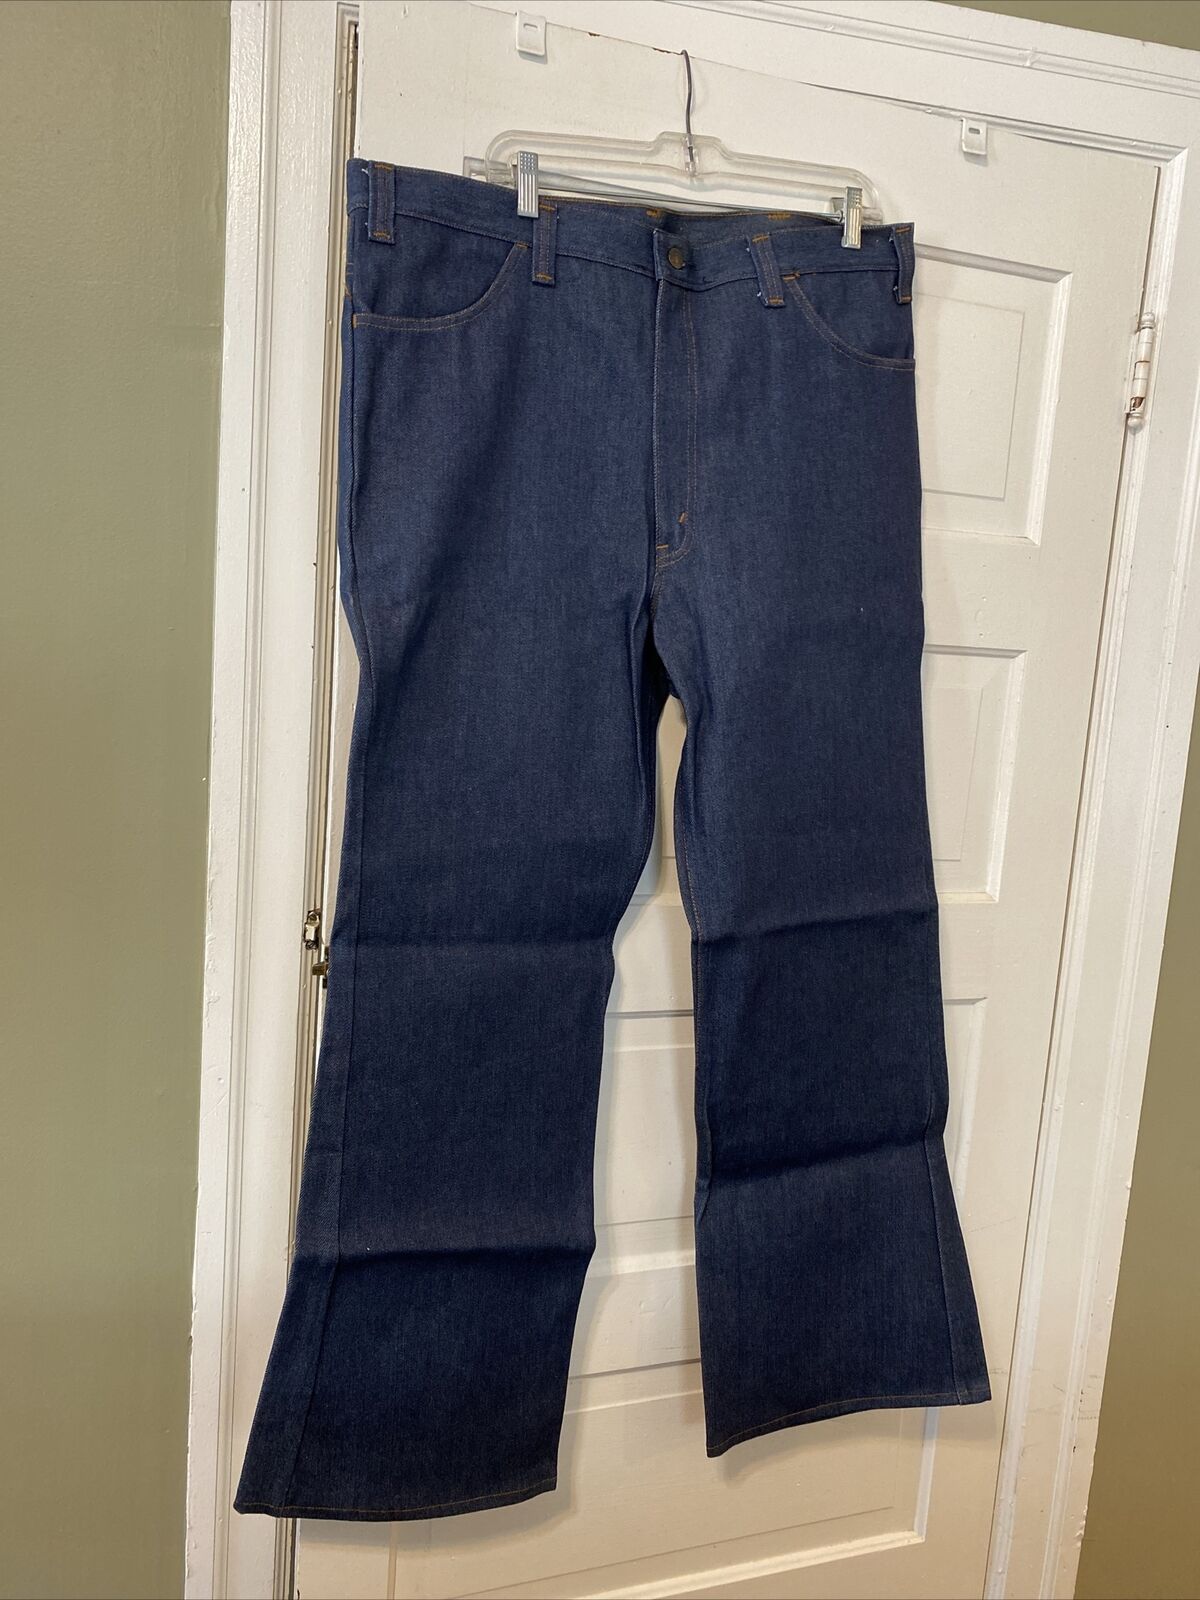 Vintage 1980s JCPenney Plain Pockets Jeans Men size 40x32 Scovill Zipper NWT